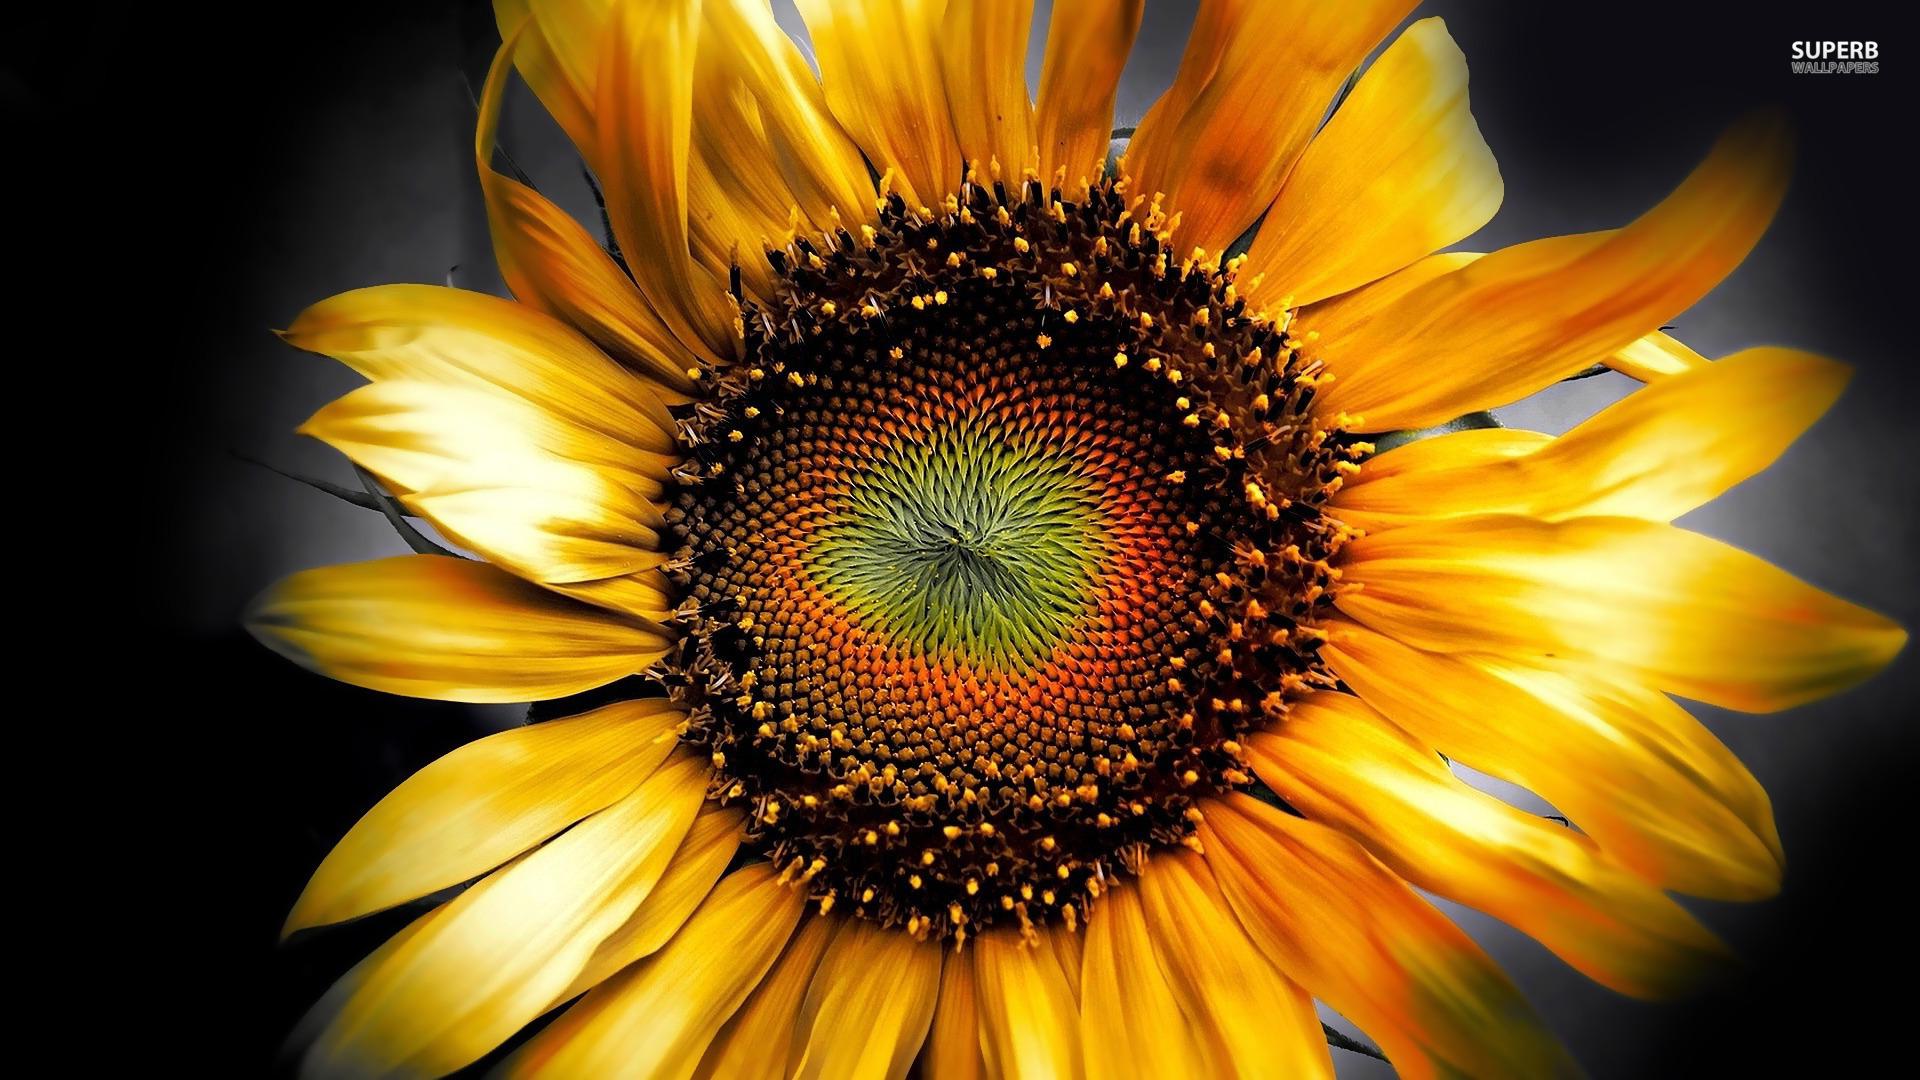 Sunflower HD Image Choice Wallpaper